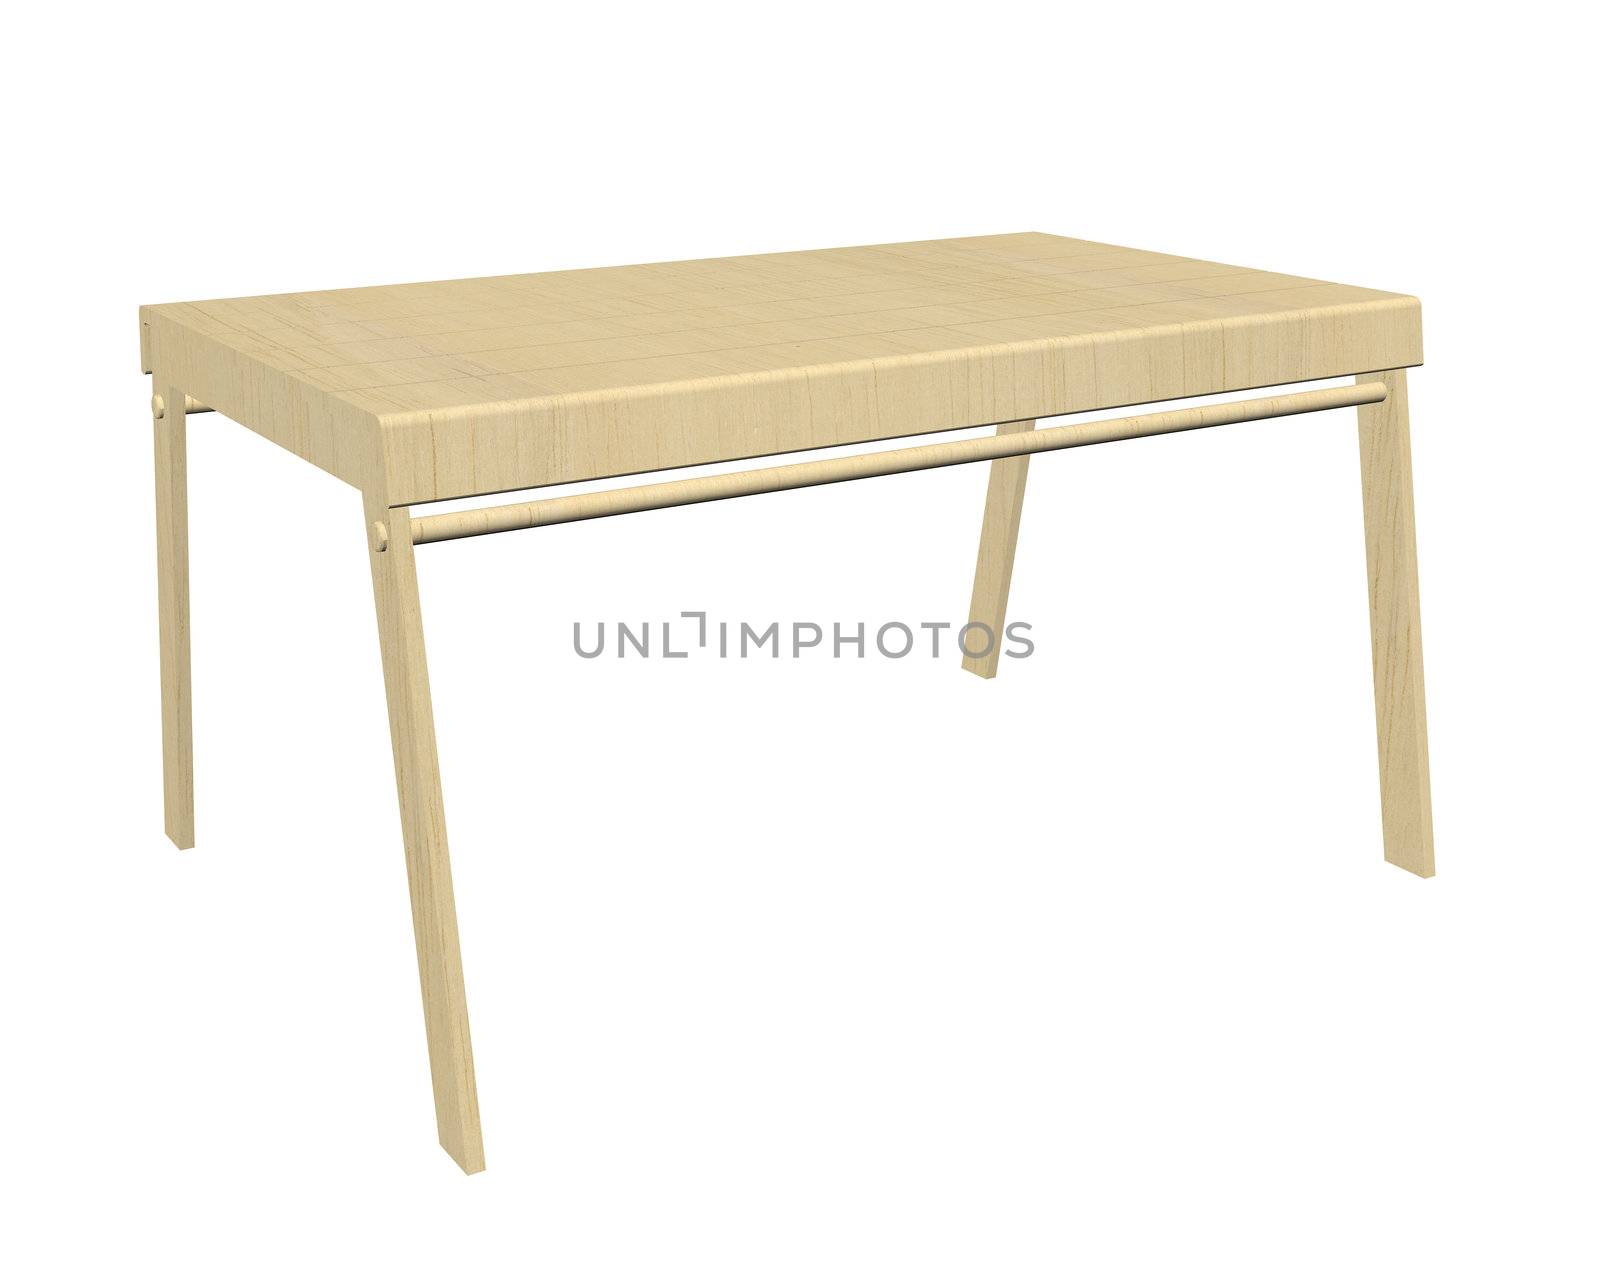 Wooden table, 3D illustration by Morphart